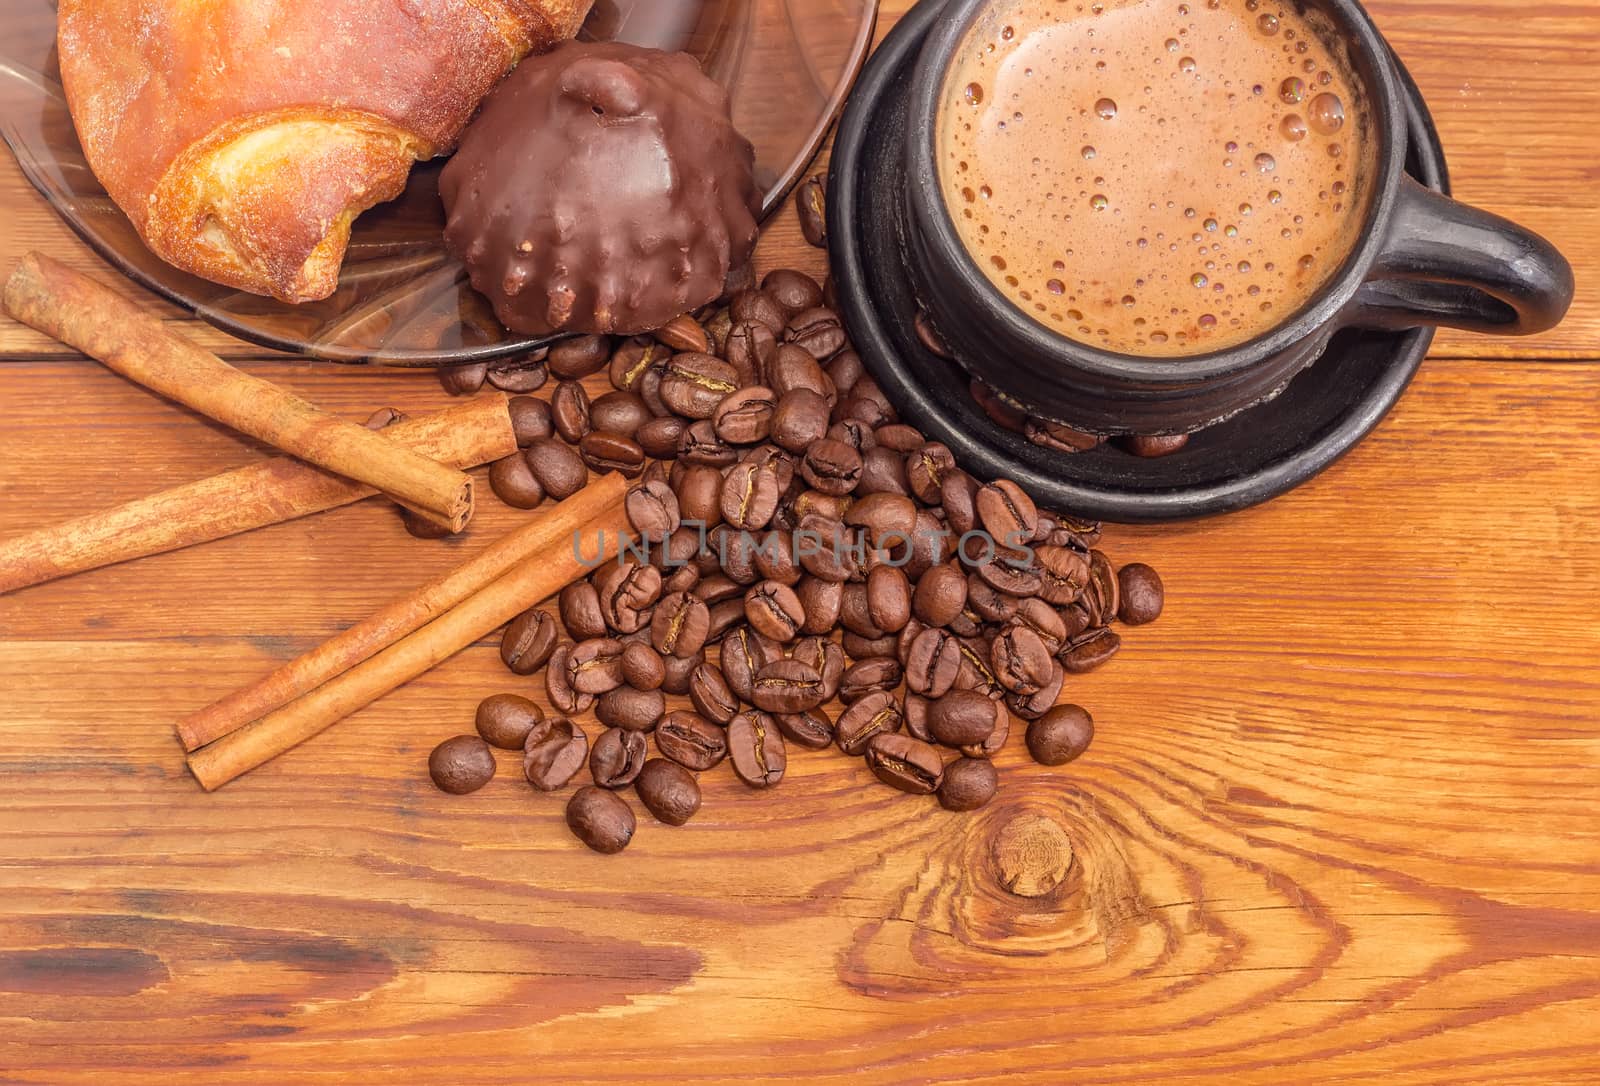 Brewed coffee, coffee beans, cinnamon sticks, chocolate truffle  by anmbph